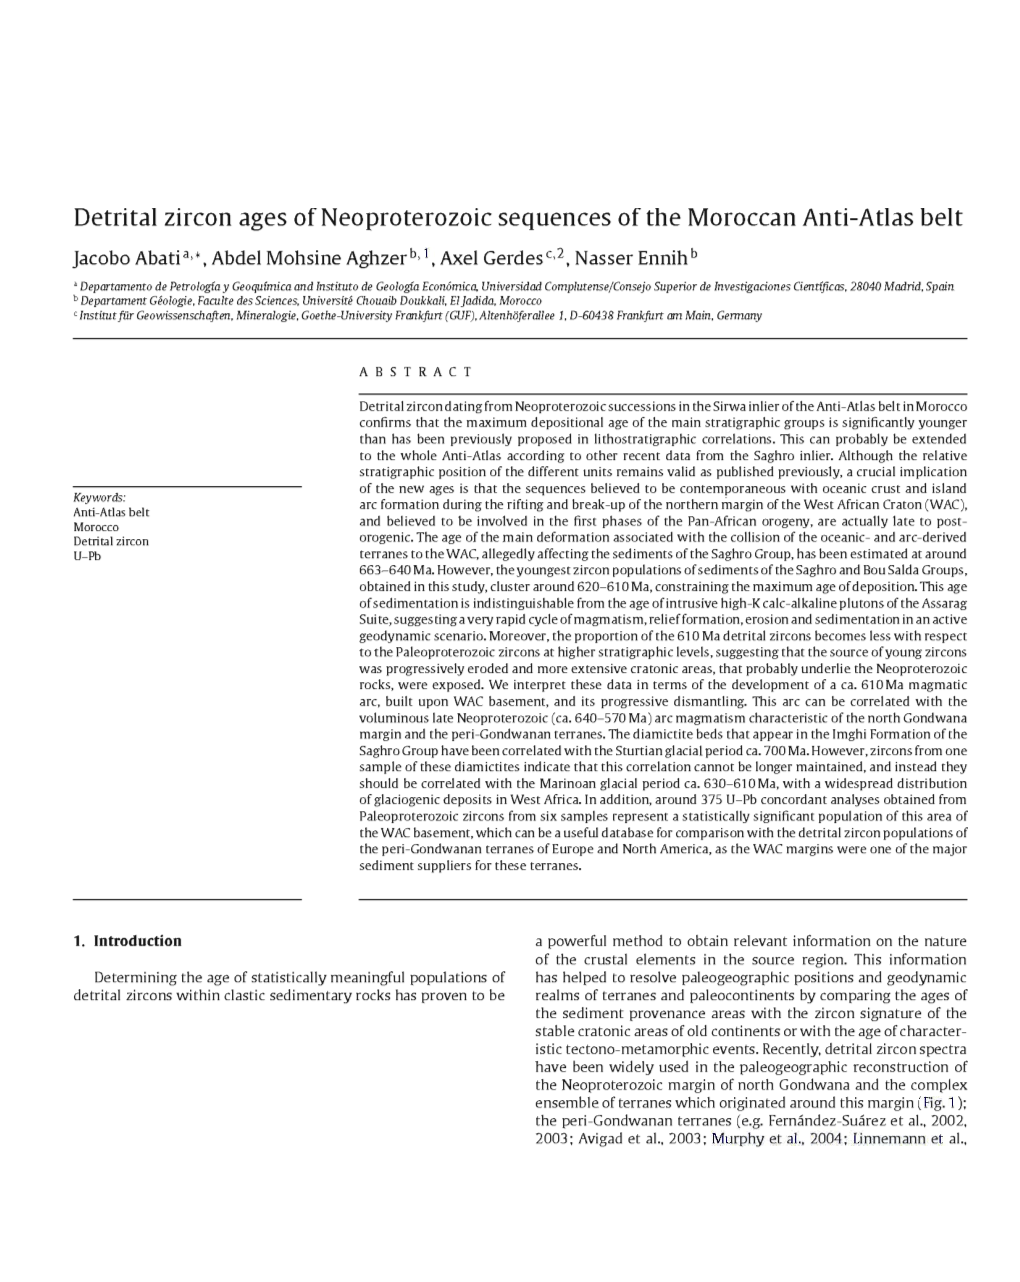 Detrital Zircon Ages of Neoproterozoic Sequences of the Moroccan Anti-Atlas Belt